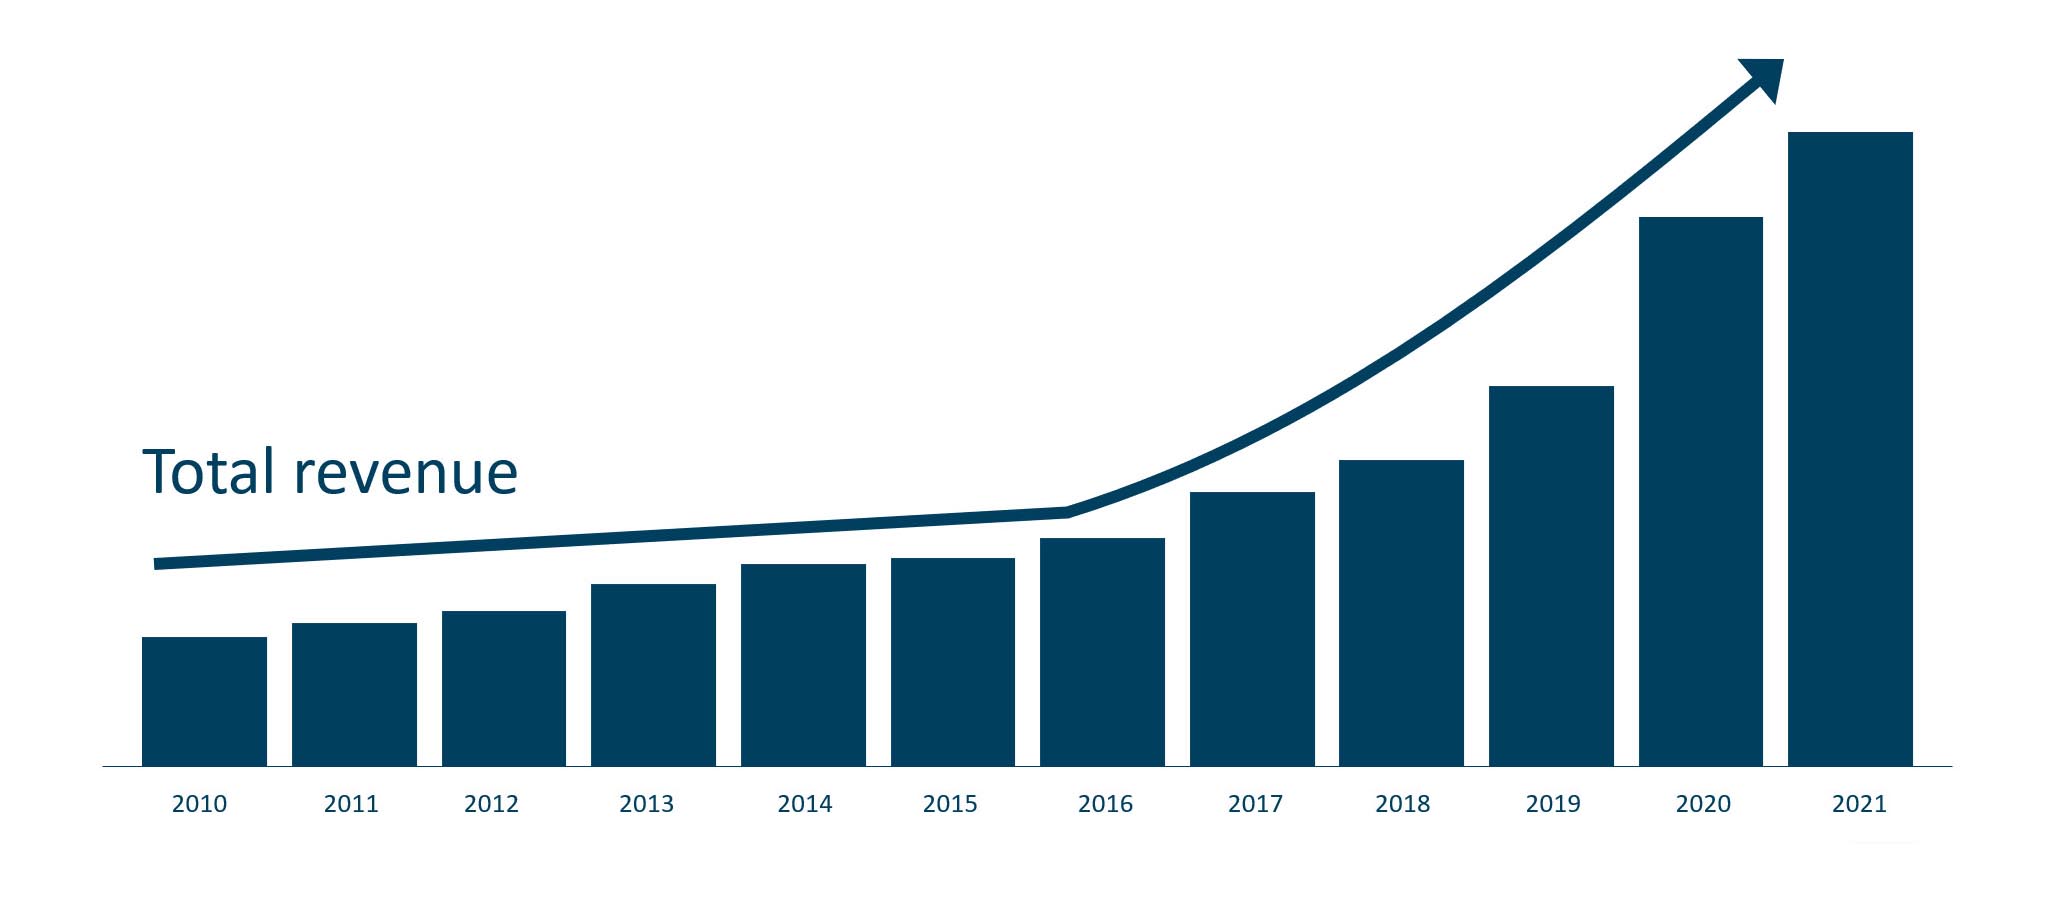 Banqsoft's financial development since 2010 showing steady growth